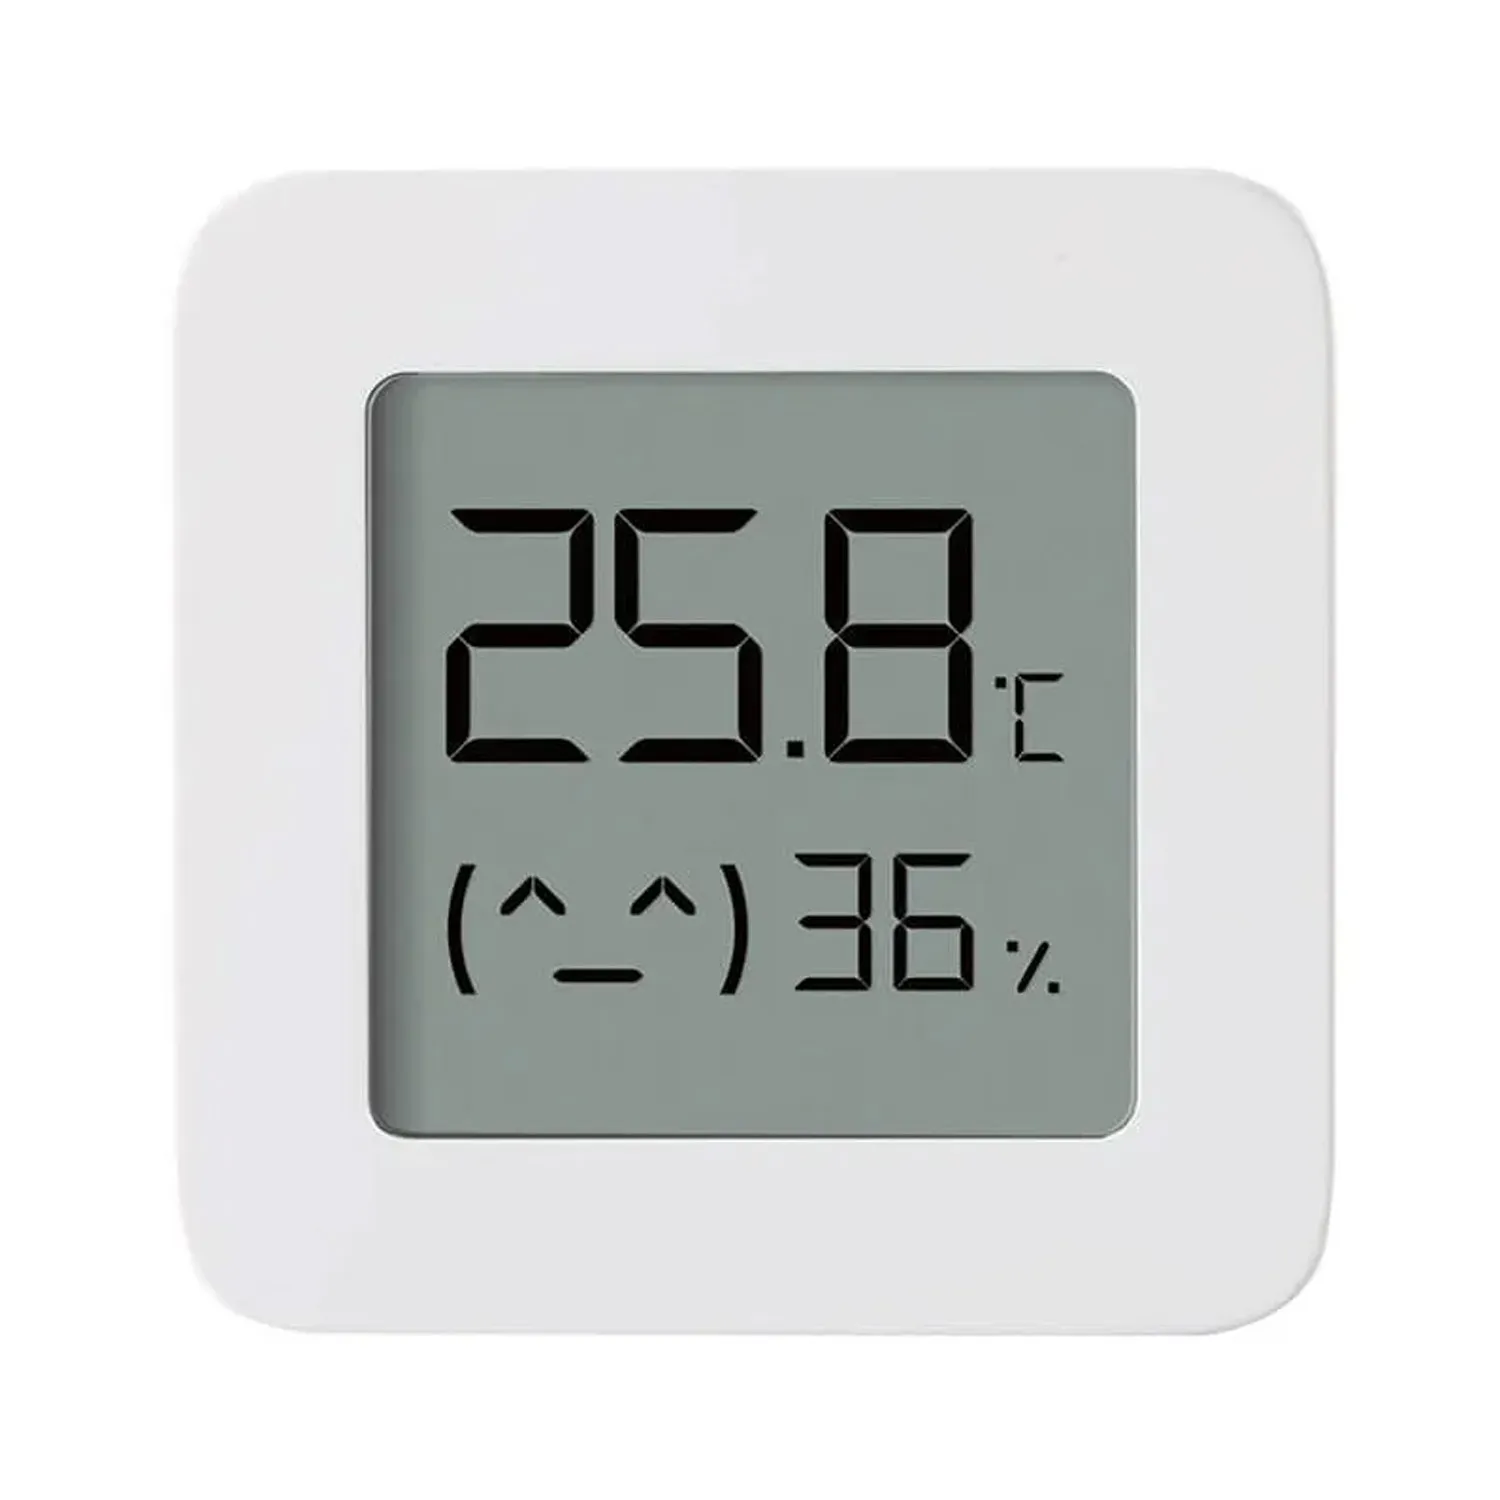 Датчик температуры и влажности Xiaomi Mijia Bluetooth Thermo-hygrometer 2 (LYWSD03MMC)